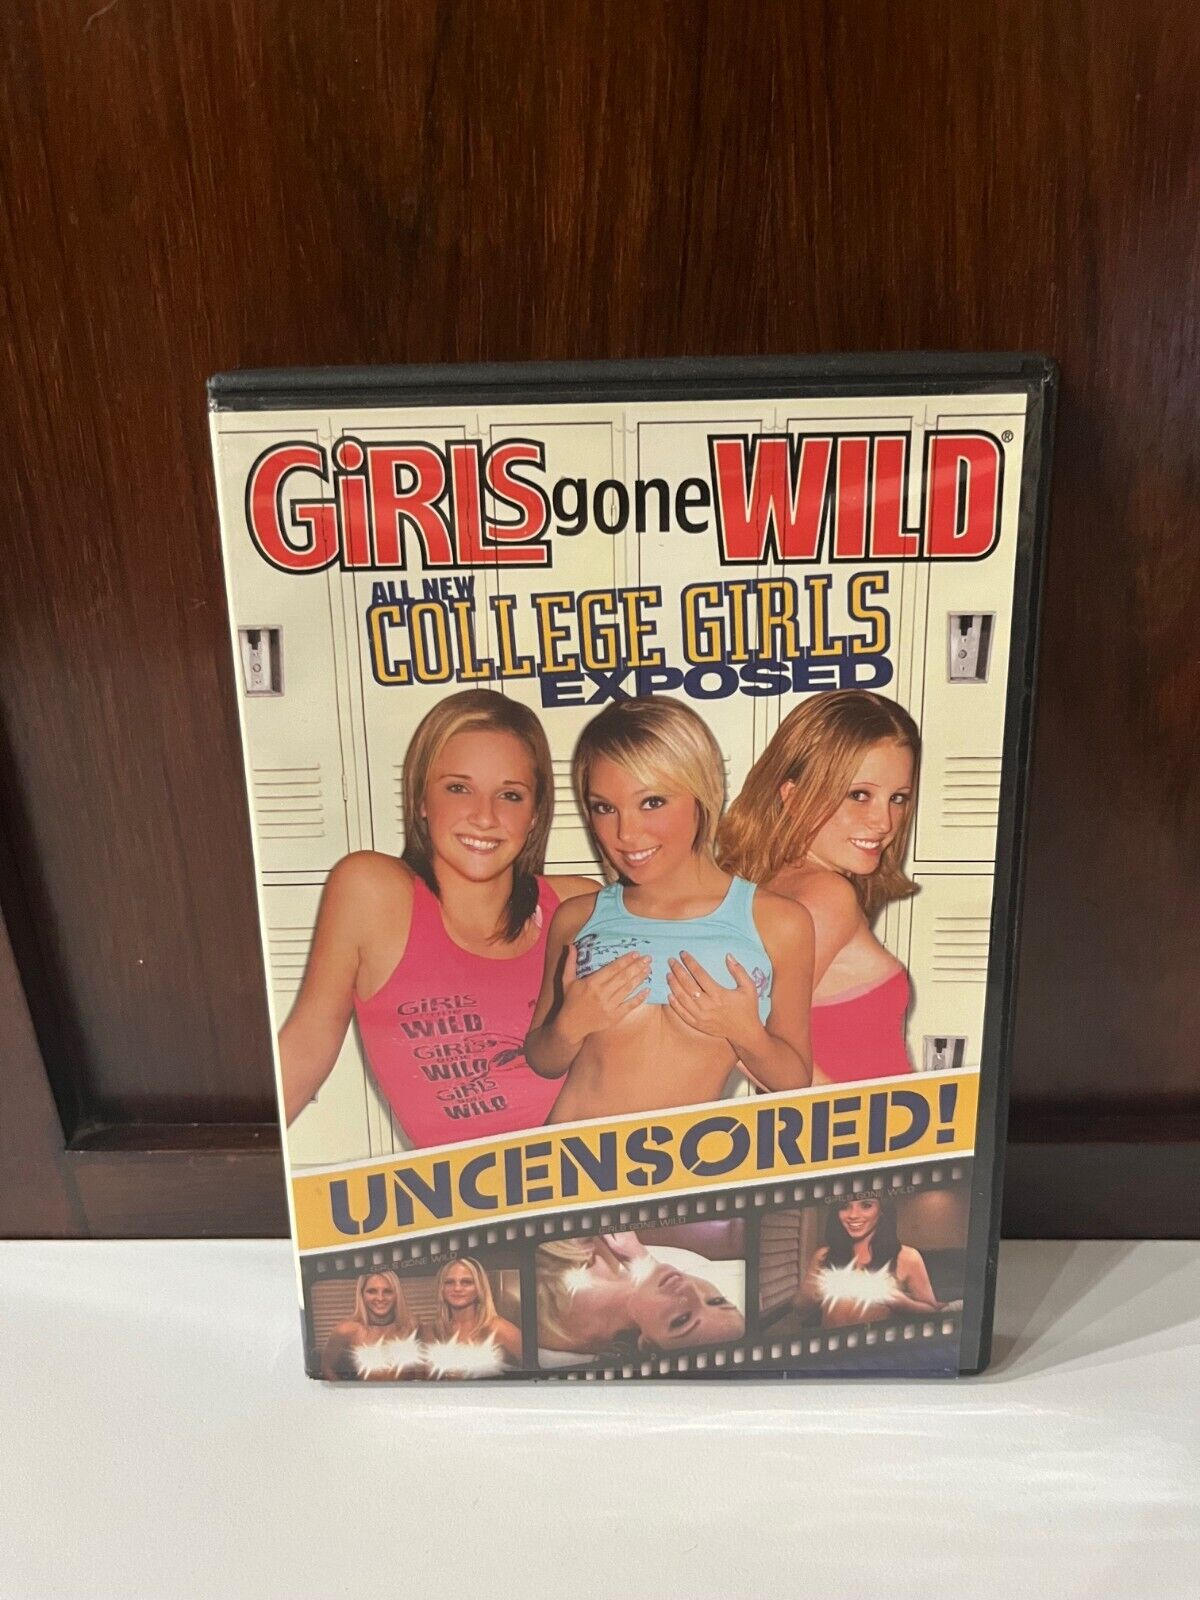 Best of Ggw college girls exposed